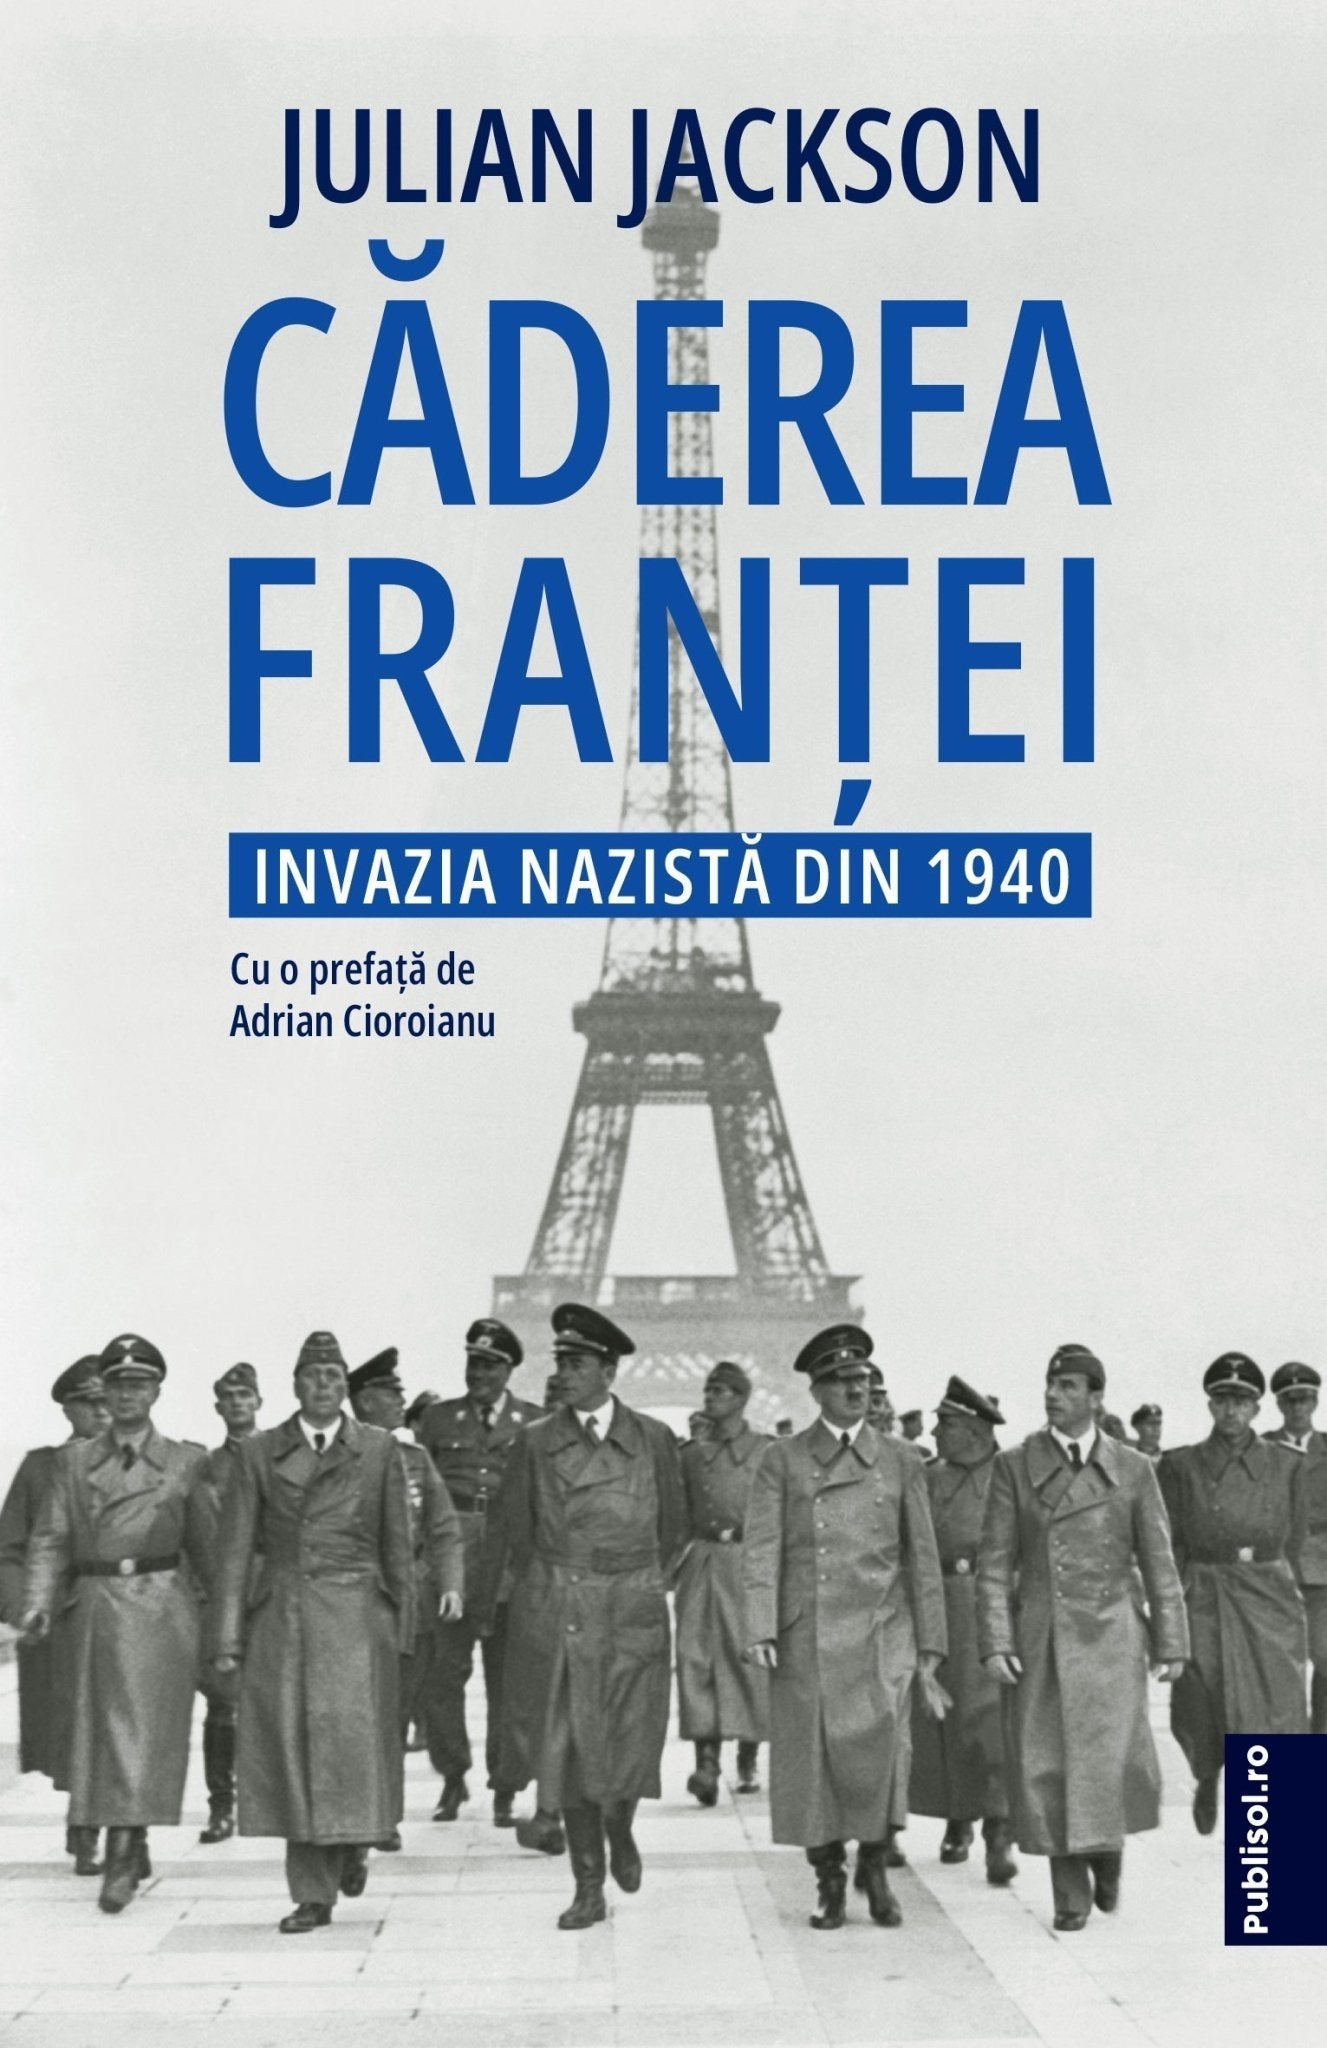 Pachet Franta sub ocupatia nazista - Ed. digitala - PDF - Publisol.ro